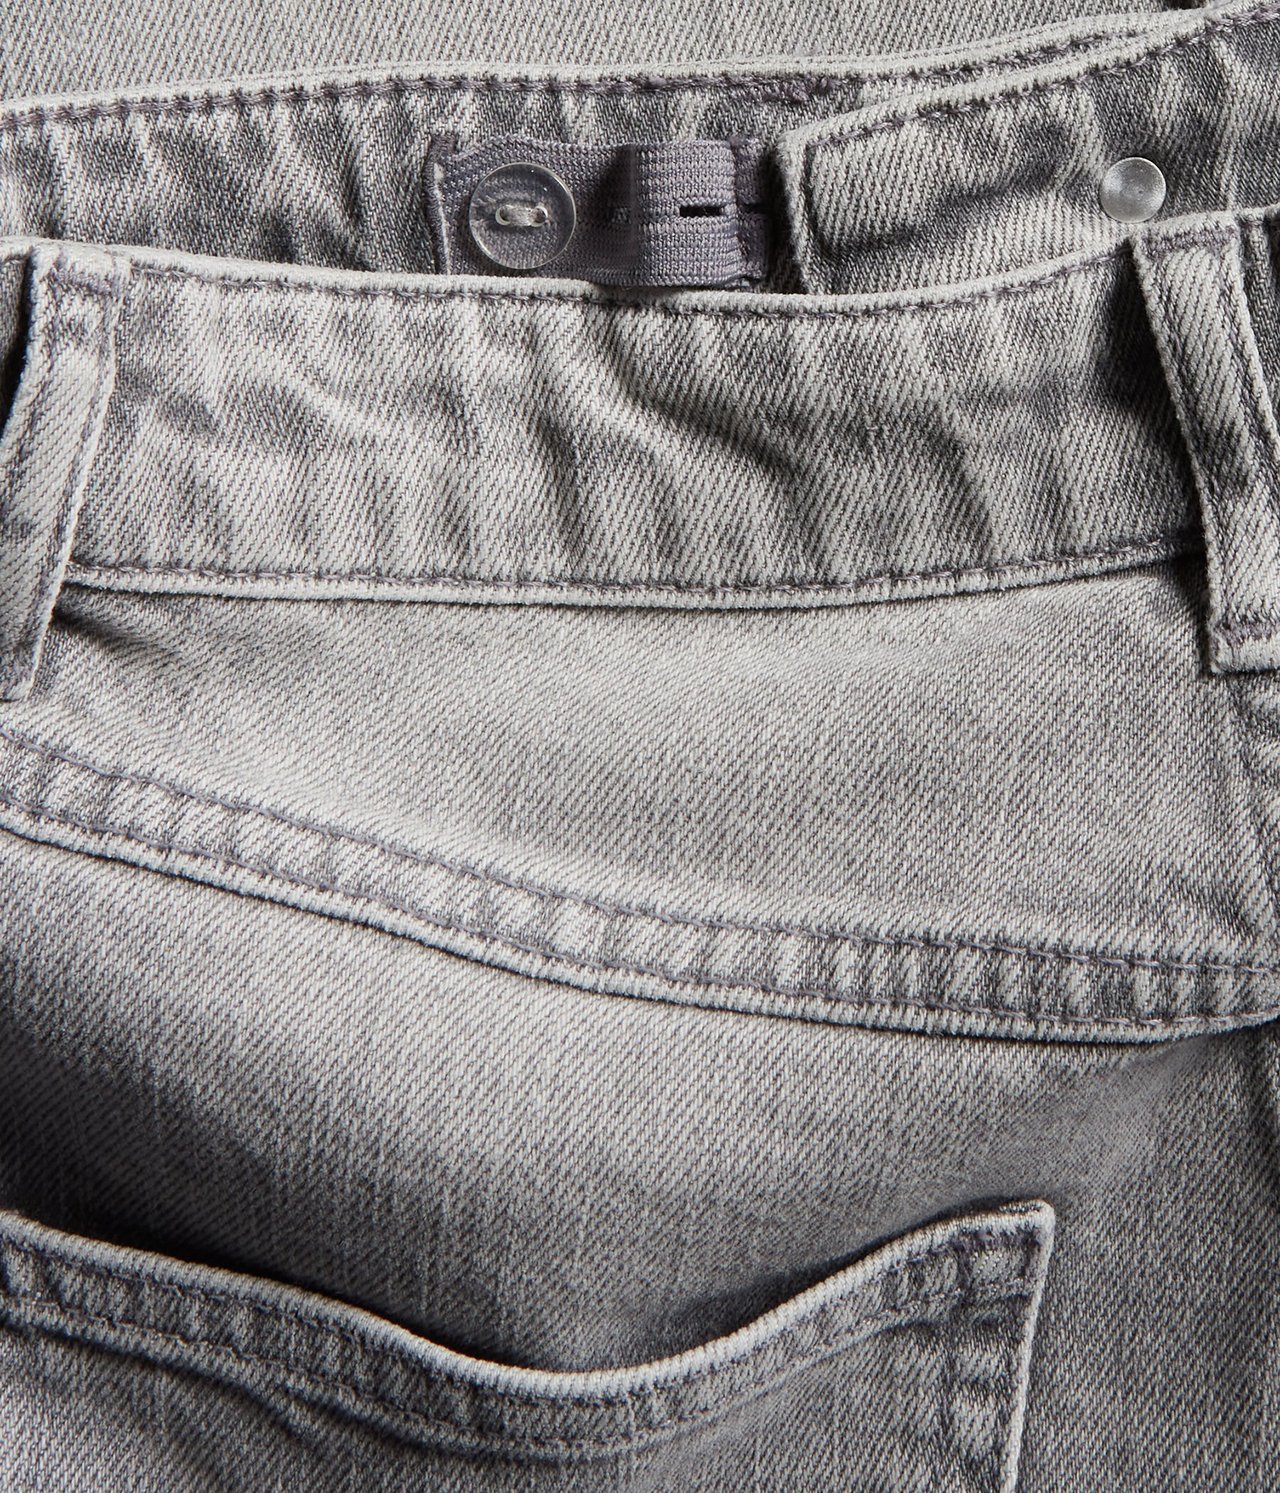 Baggy jeans loose fit Hopeanharmaa - null - 5